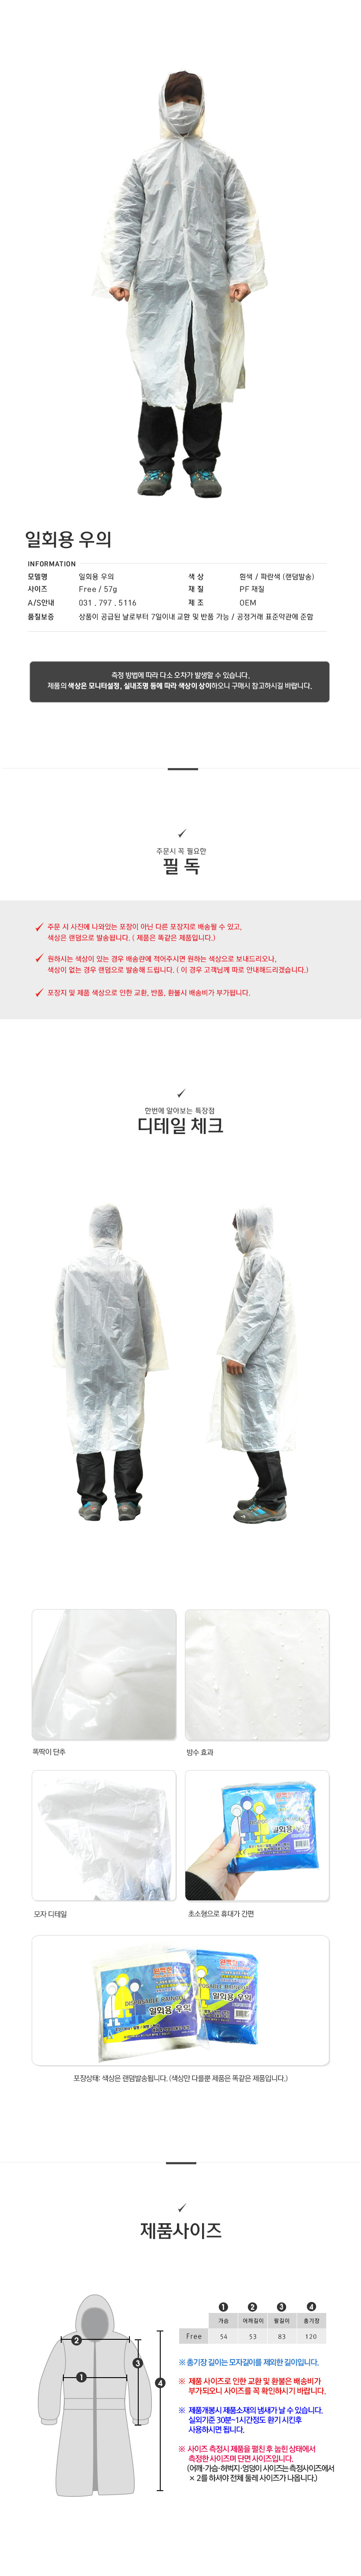 01_raincoat.jpg